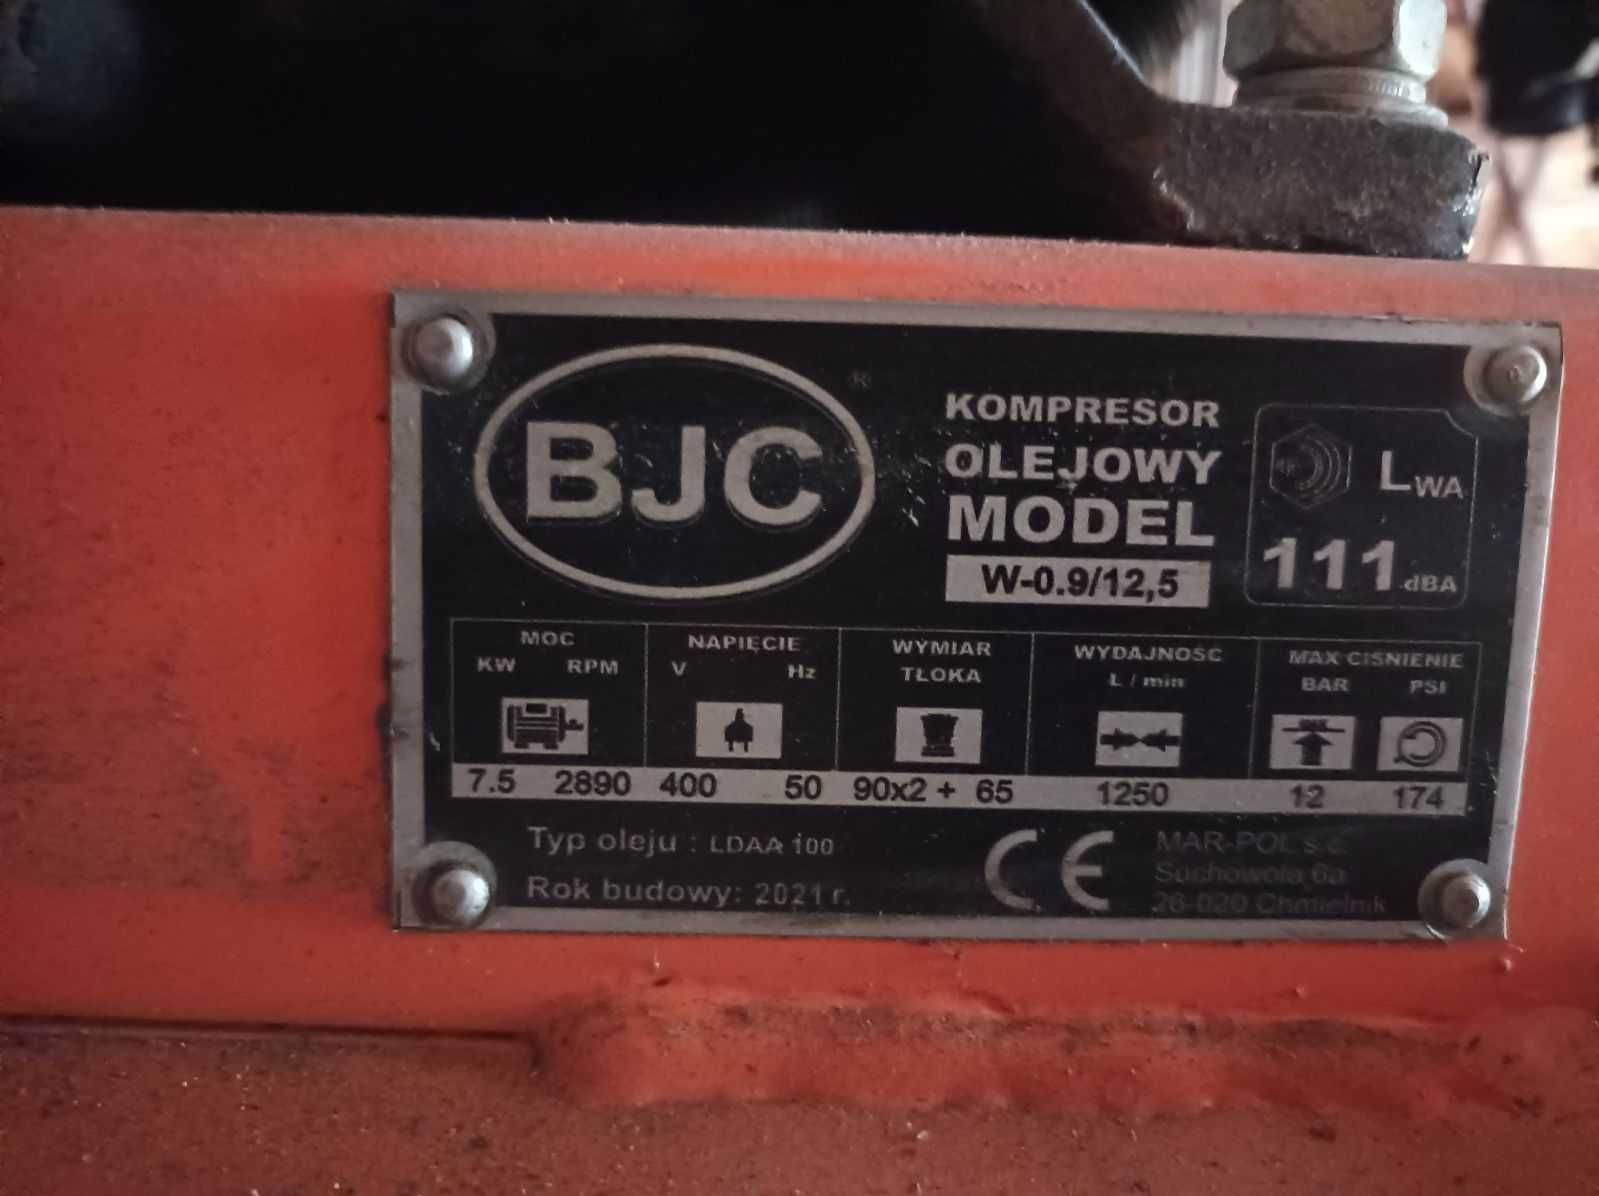 Kompresor olejowy BJC 350L